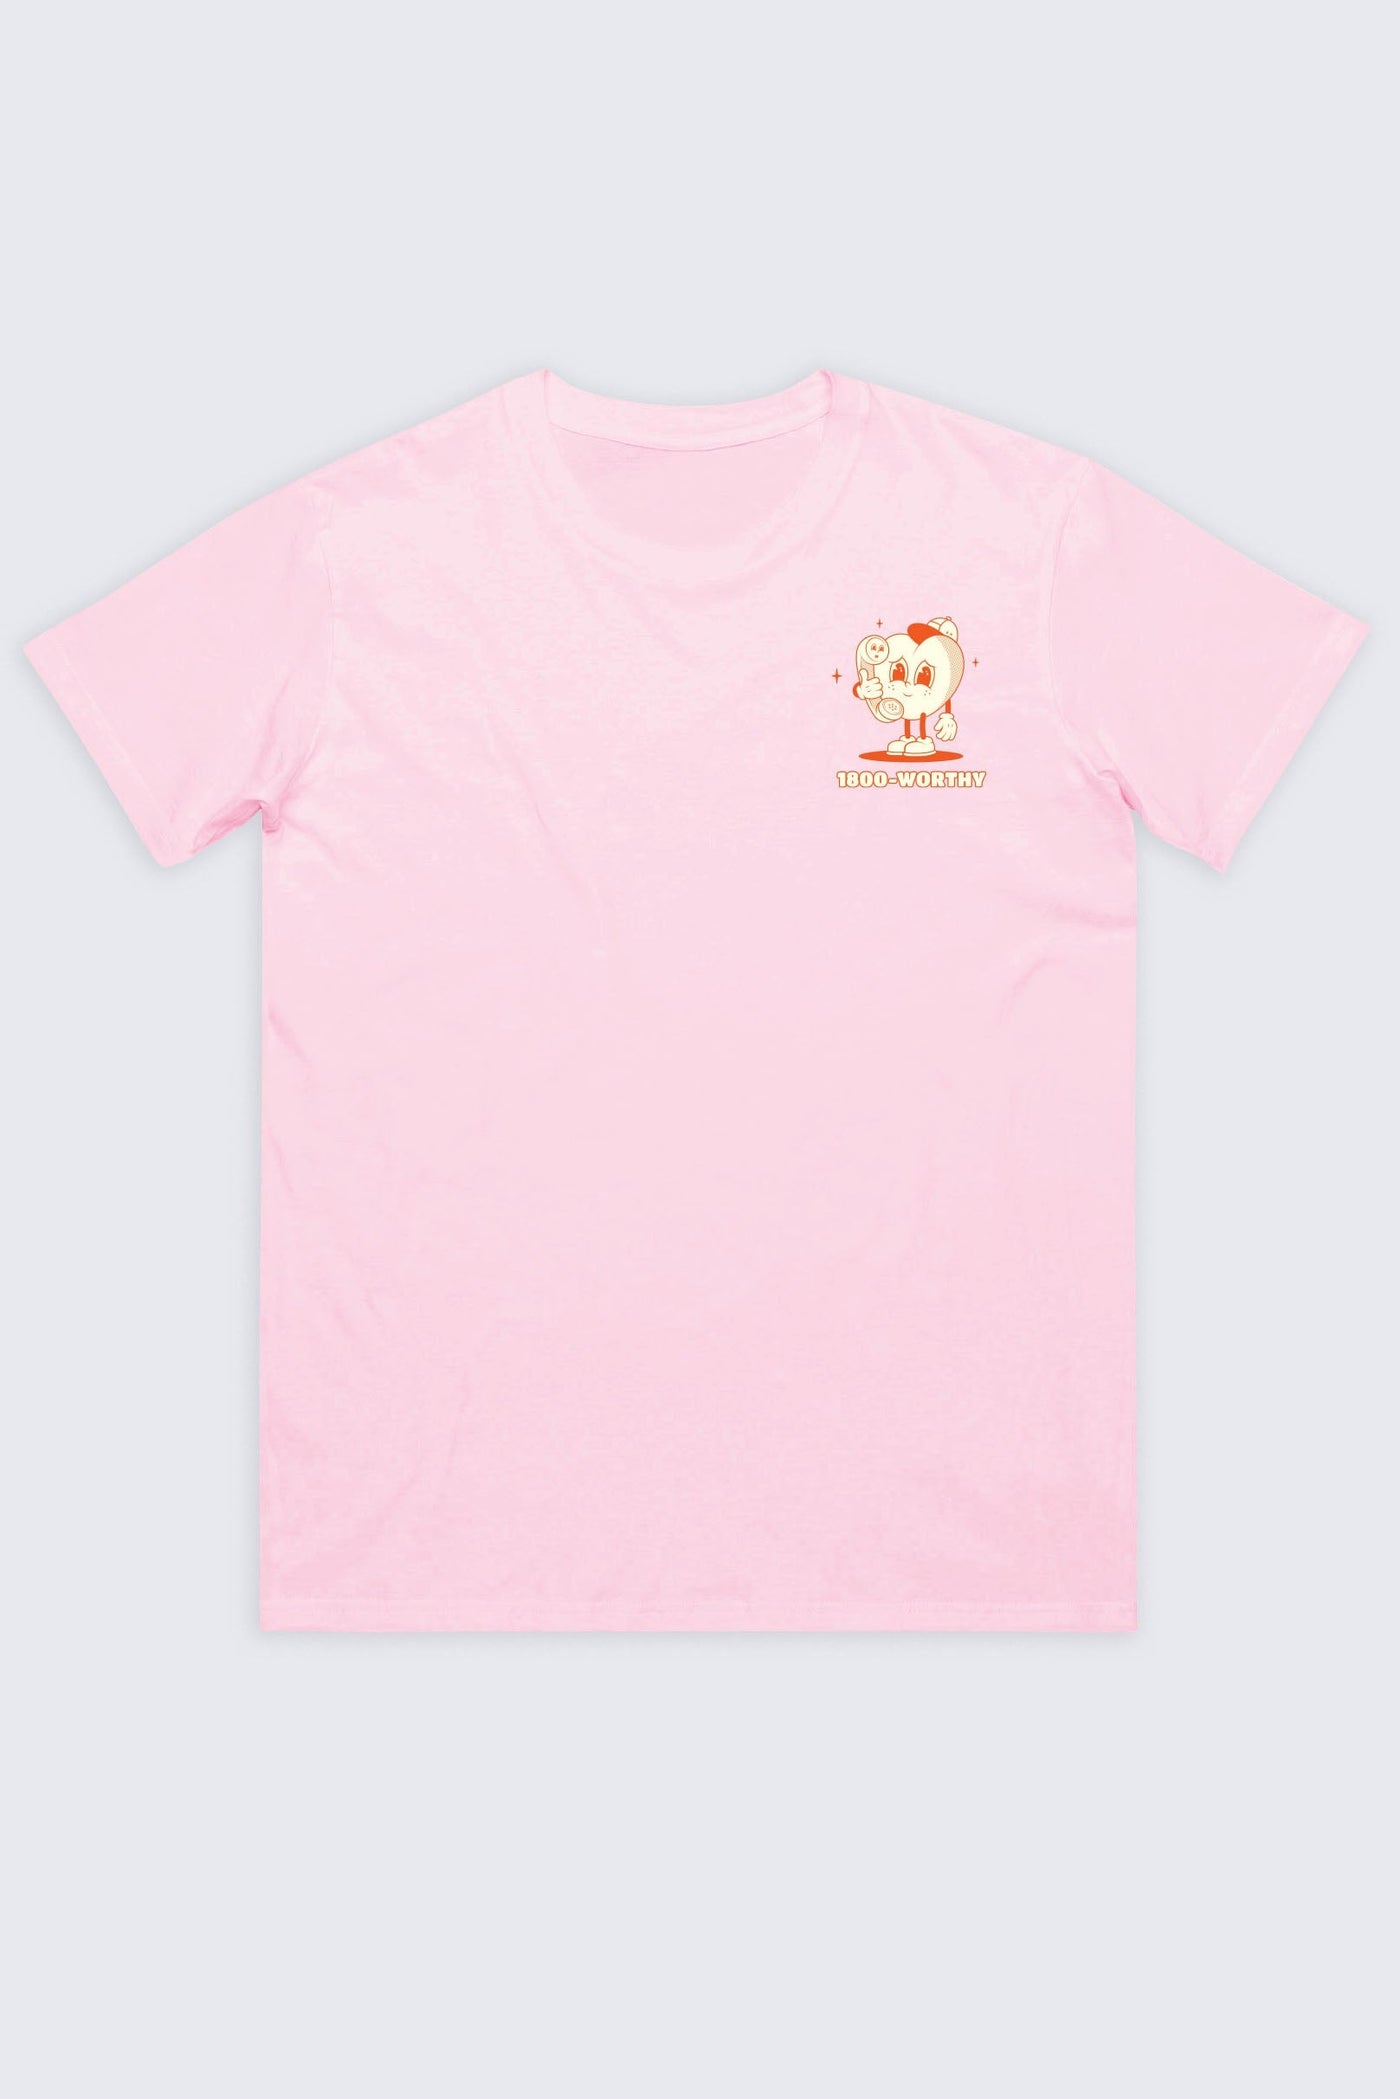 Call Me Worthy Hotline T-Shirt Pink Shirts Selfawear 